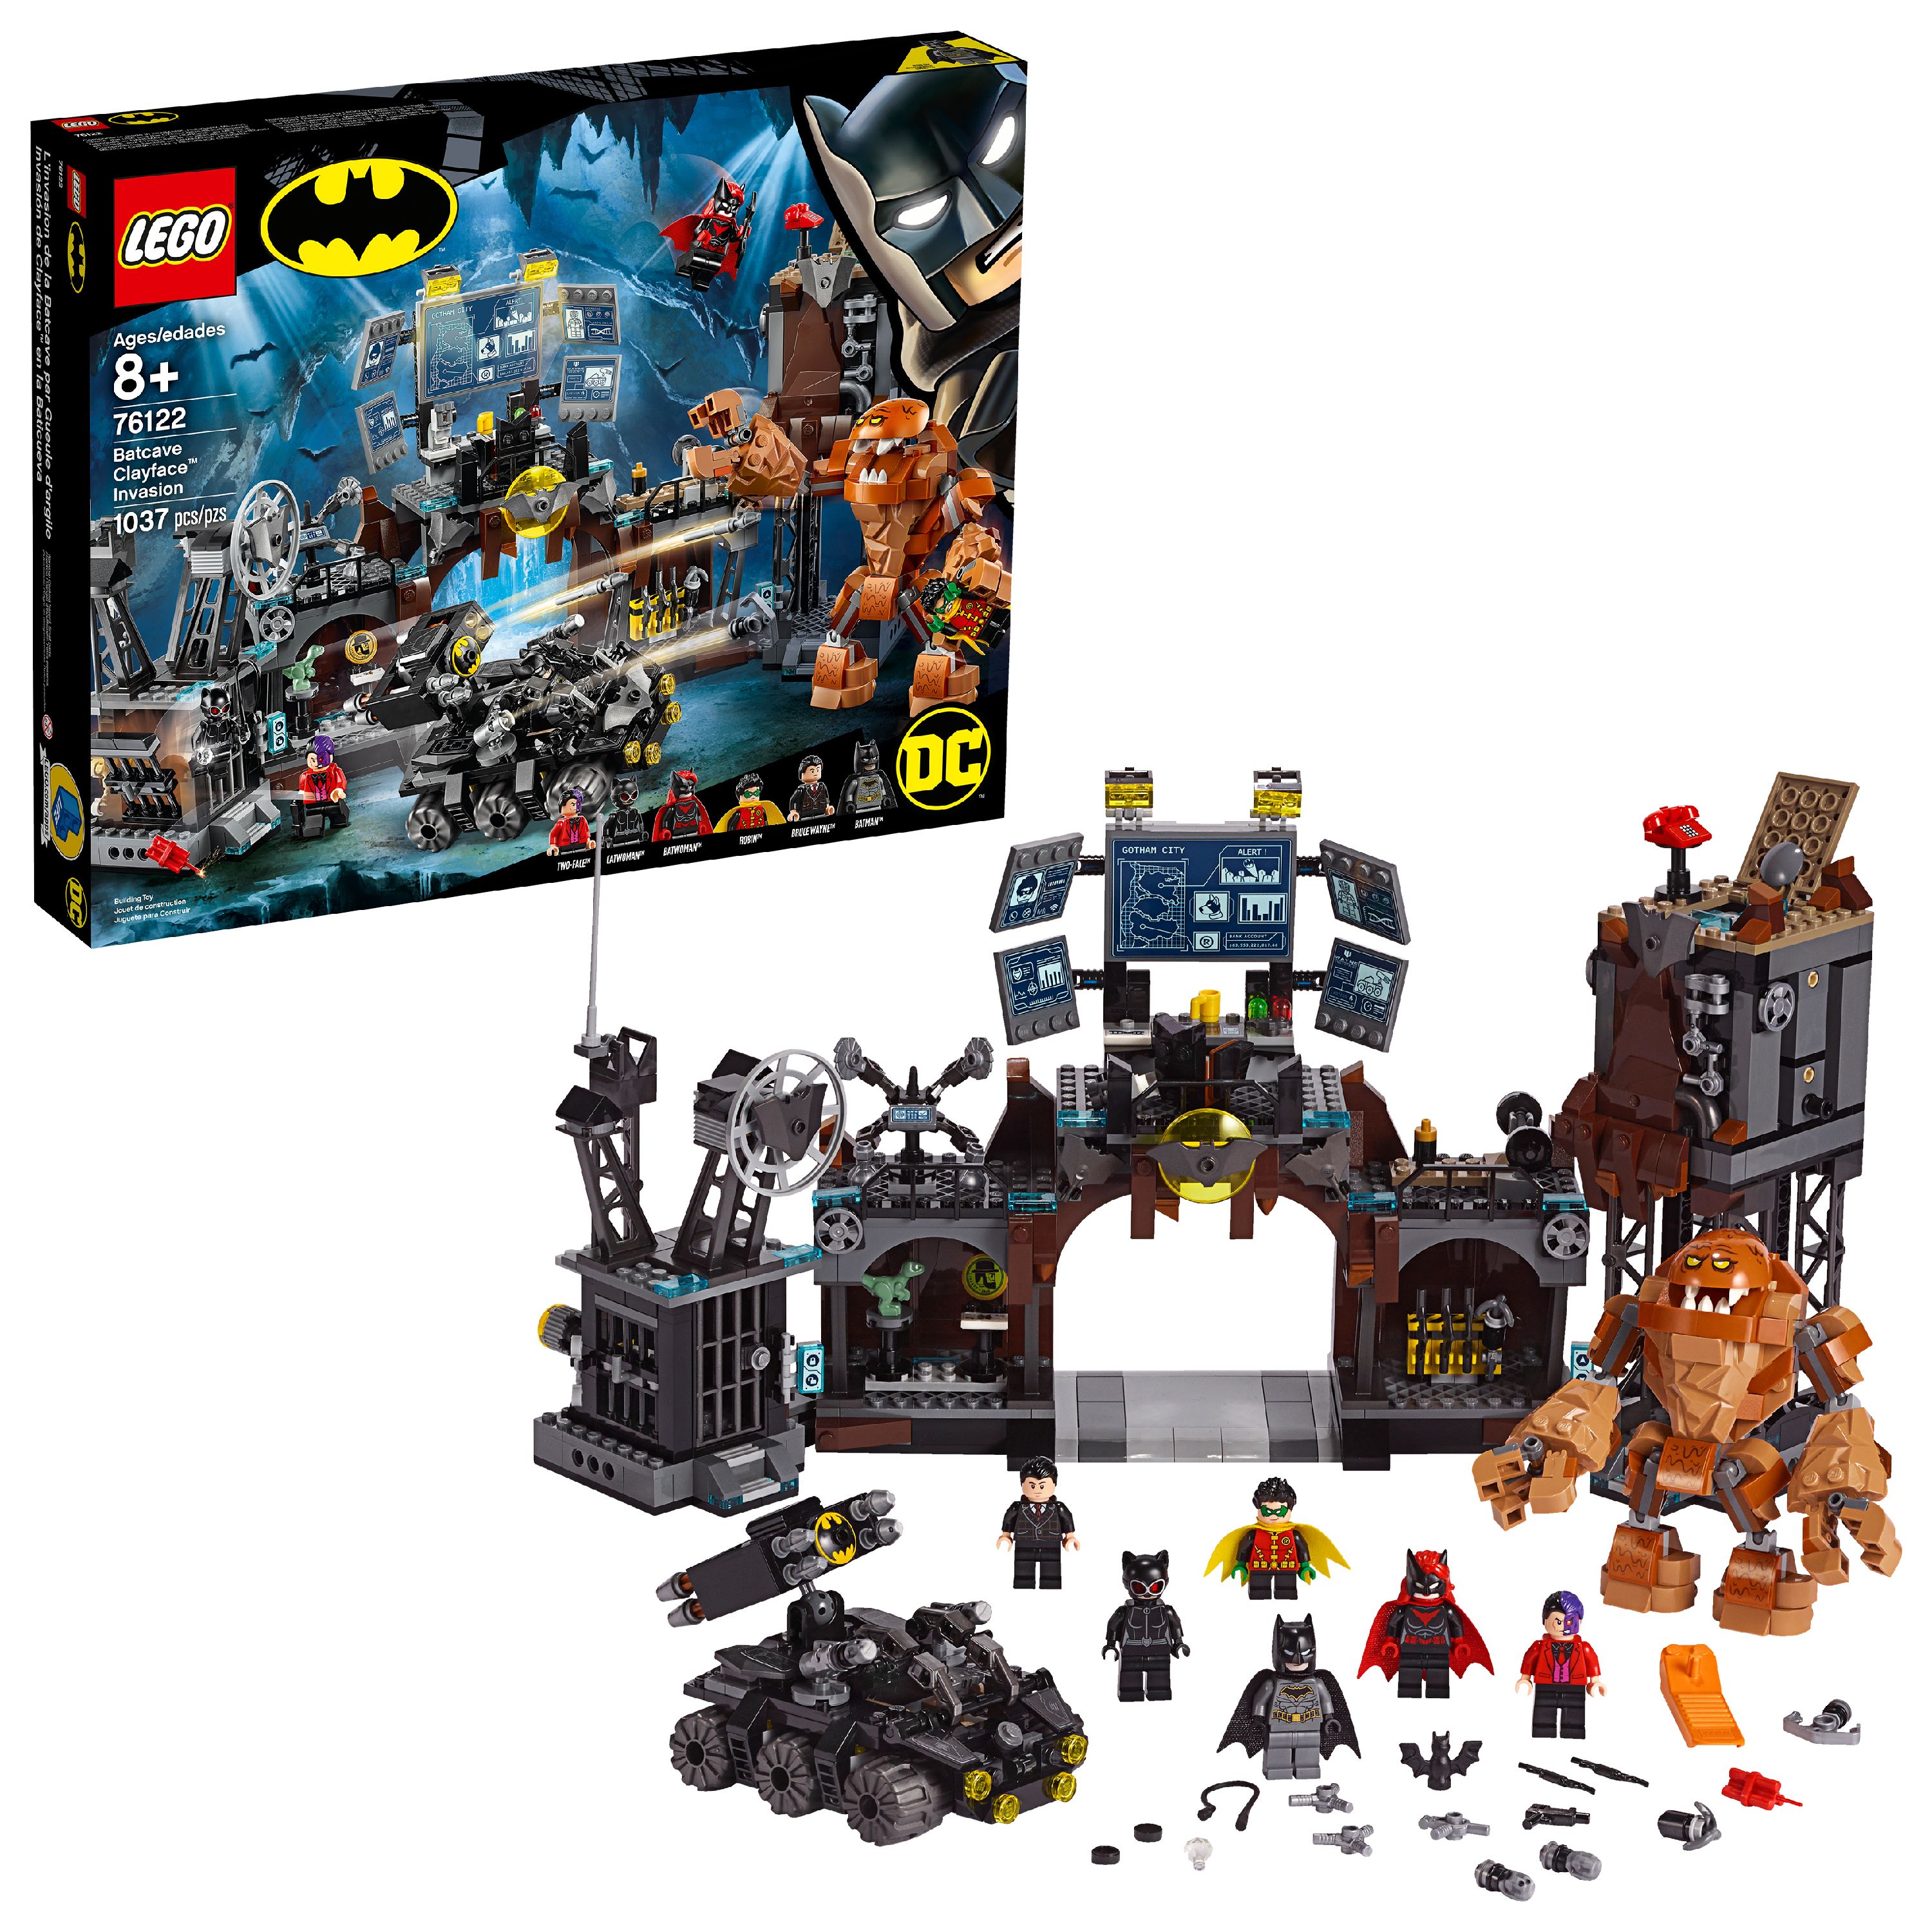 LEGO Super Heroes Batcave Clayface Invasion 76122 Batman DC Toy Building Kit - image 1 of 8